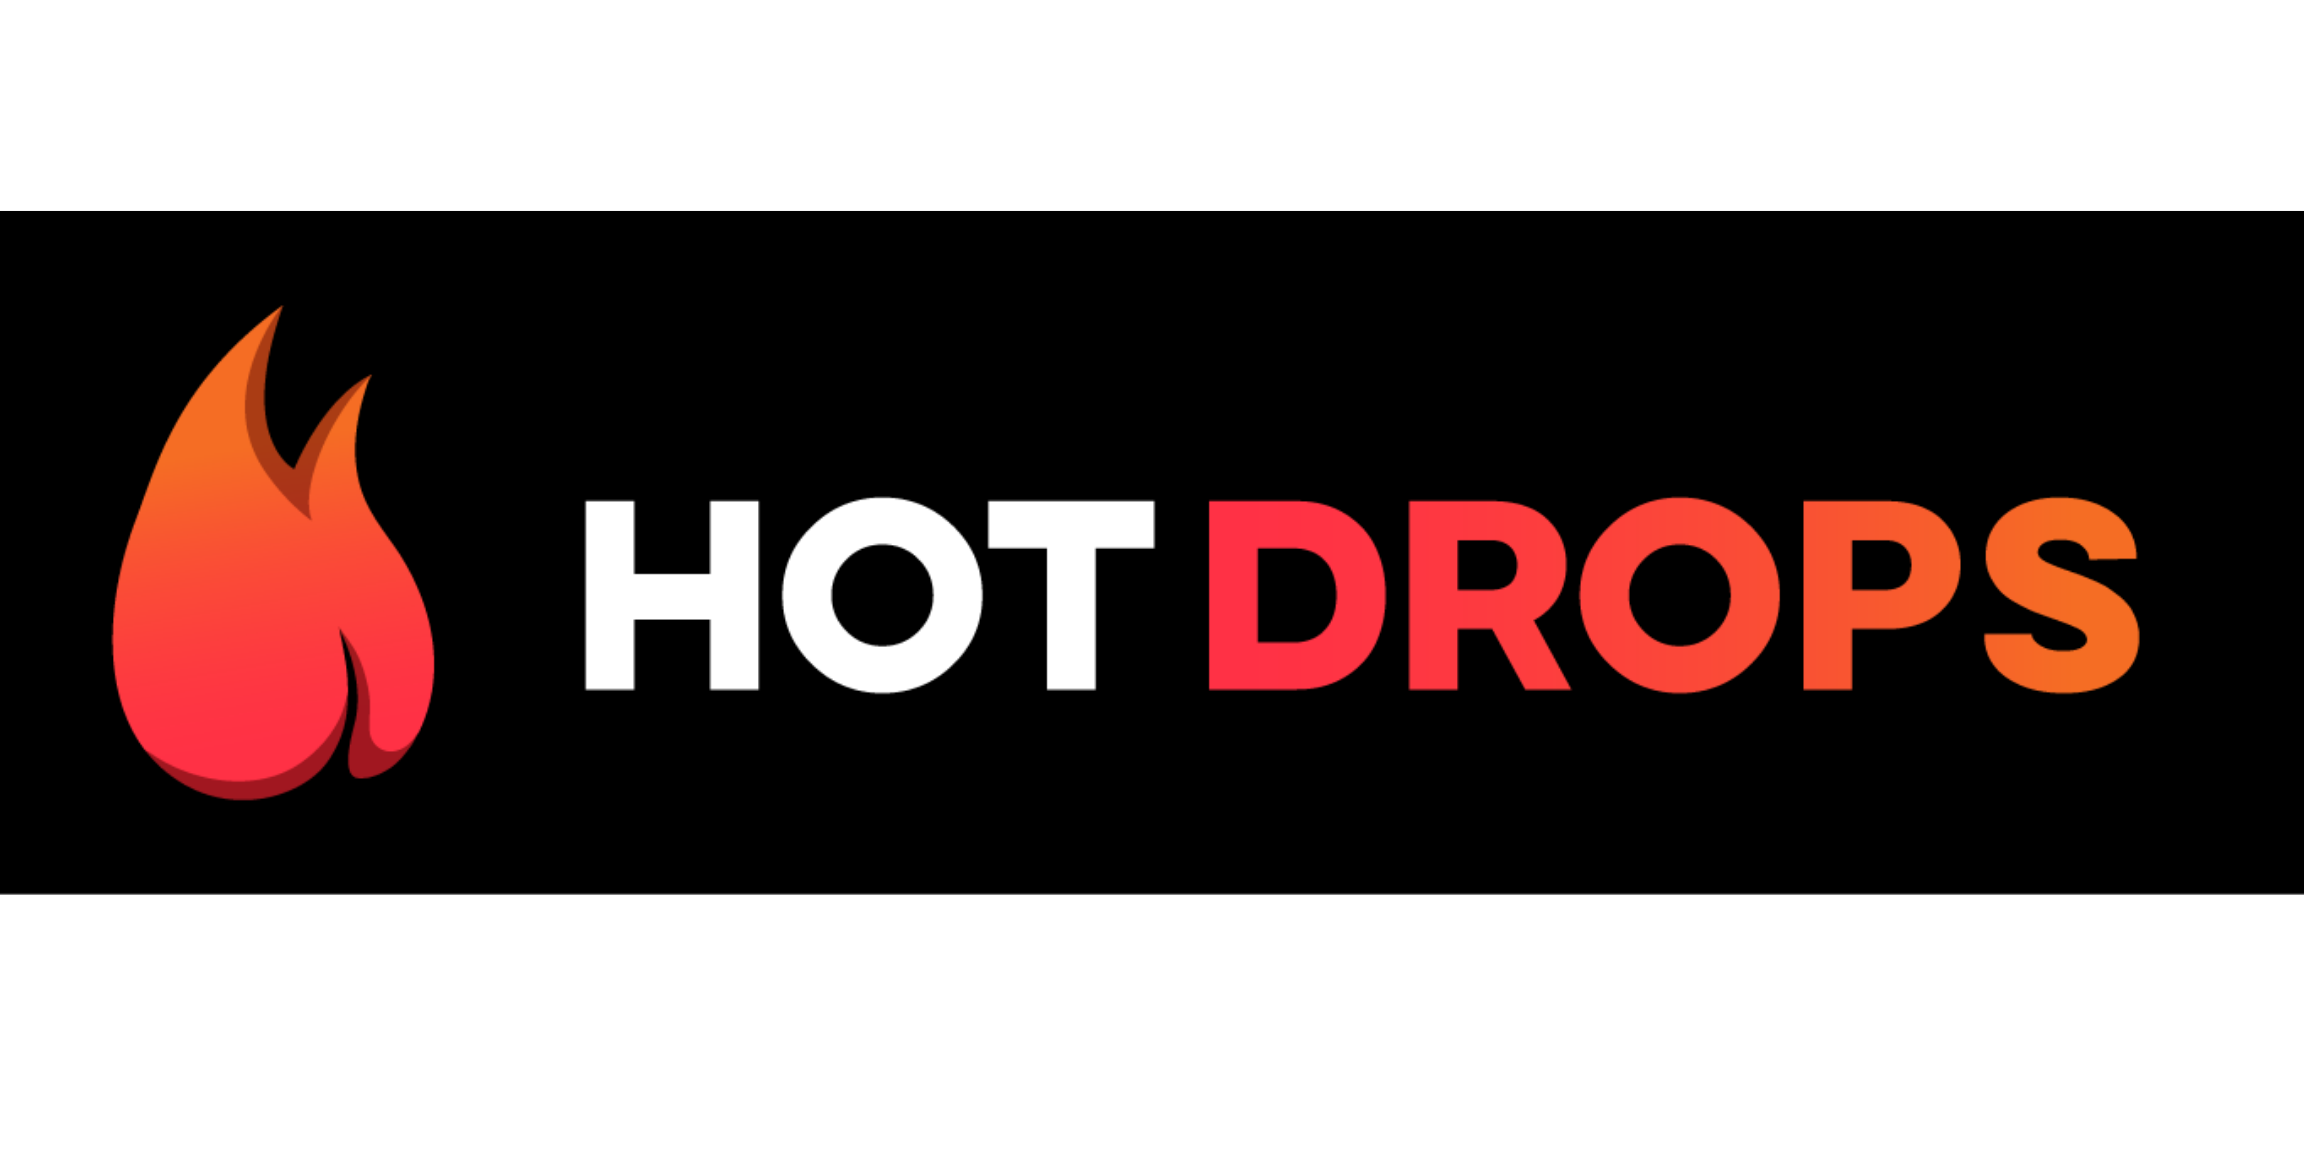 HotDrops Logo (24 x 12 in)1